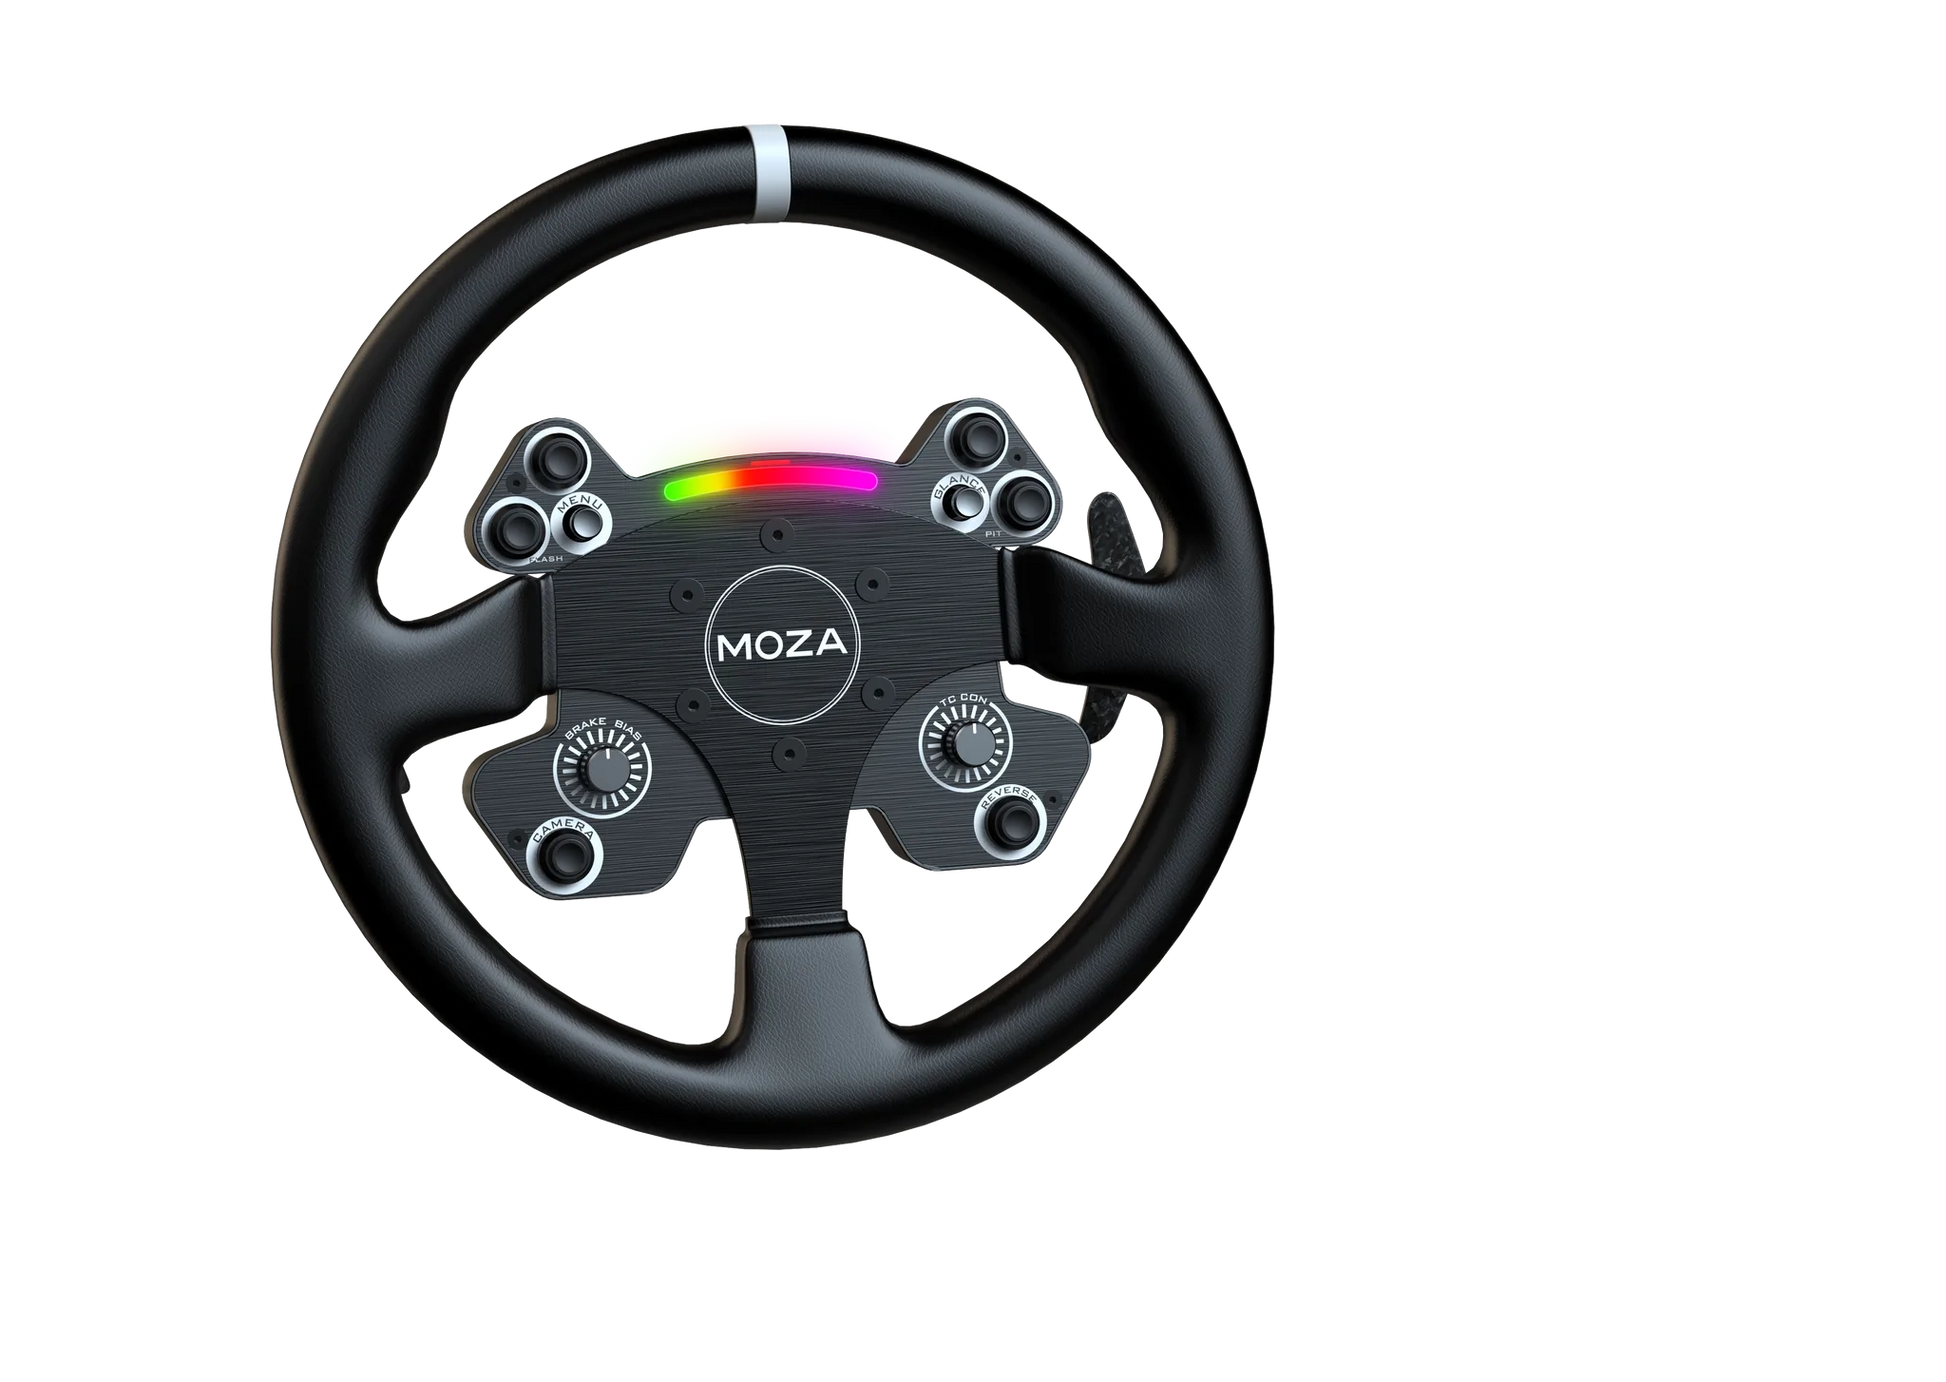 Moza Racing KS Steering Wheel - Moza KS Steering Wheel